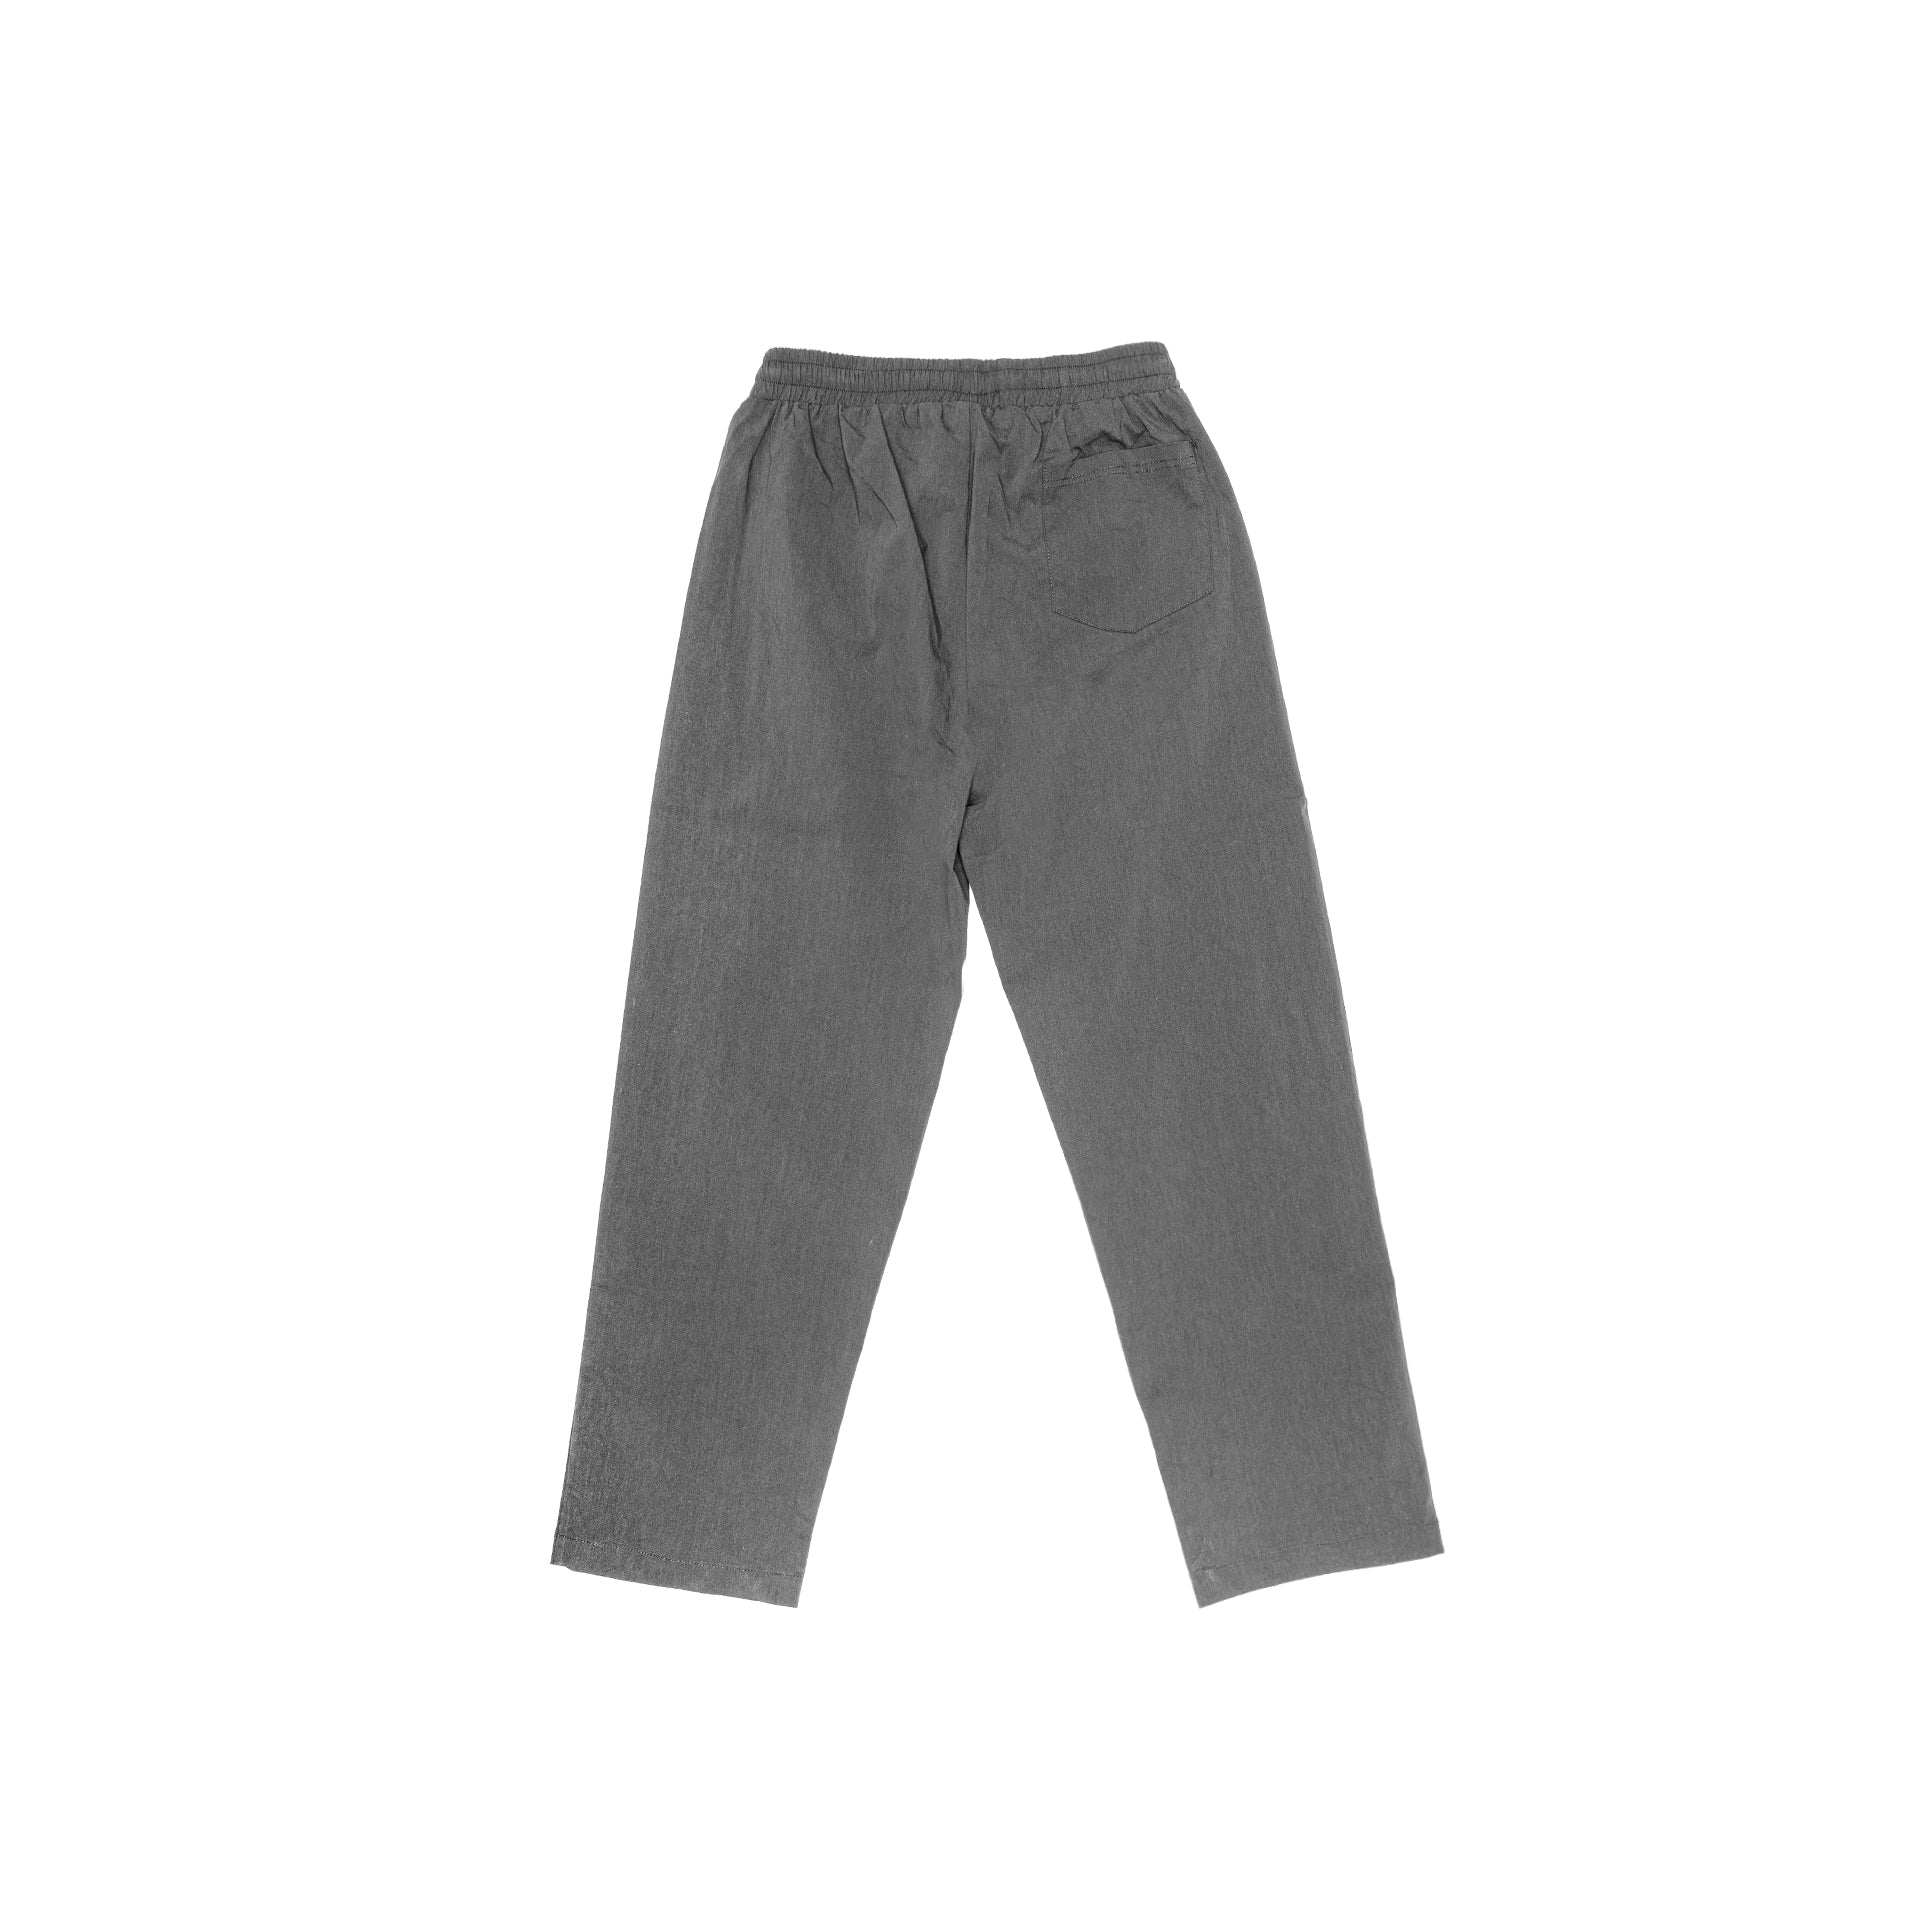 Gray Premium Pants by Brandtionary